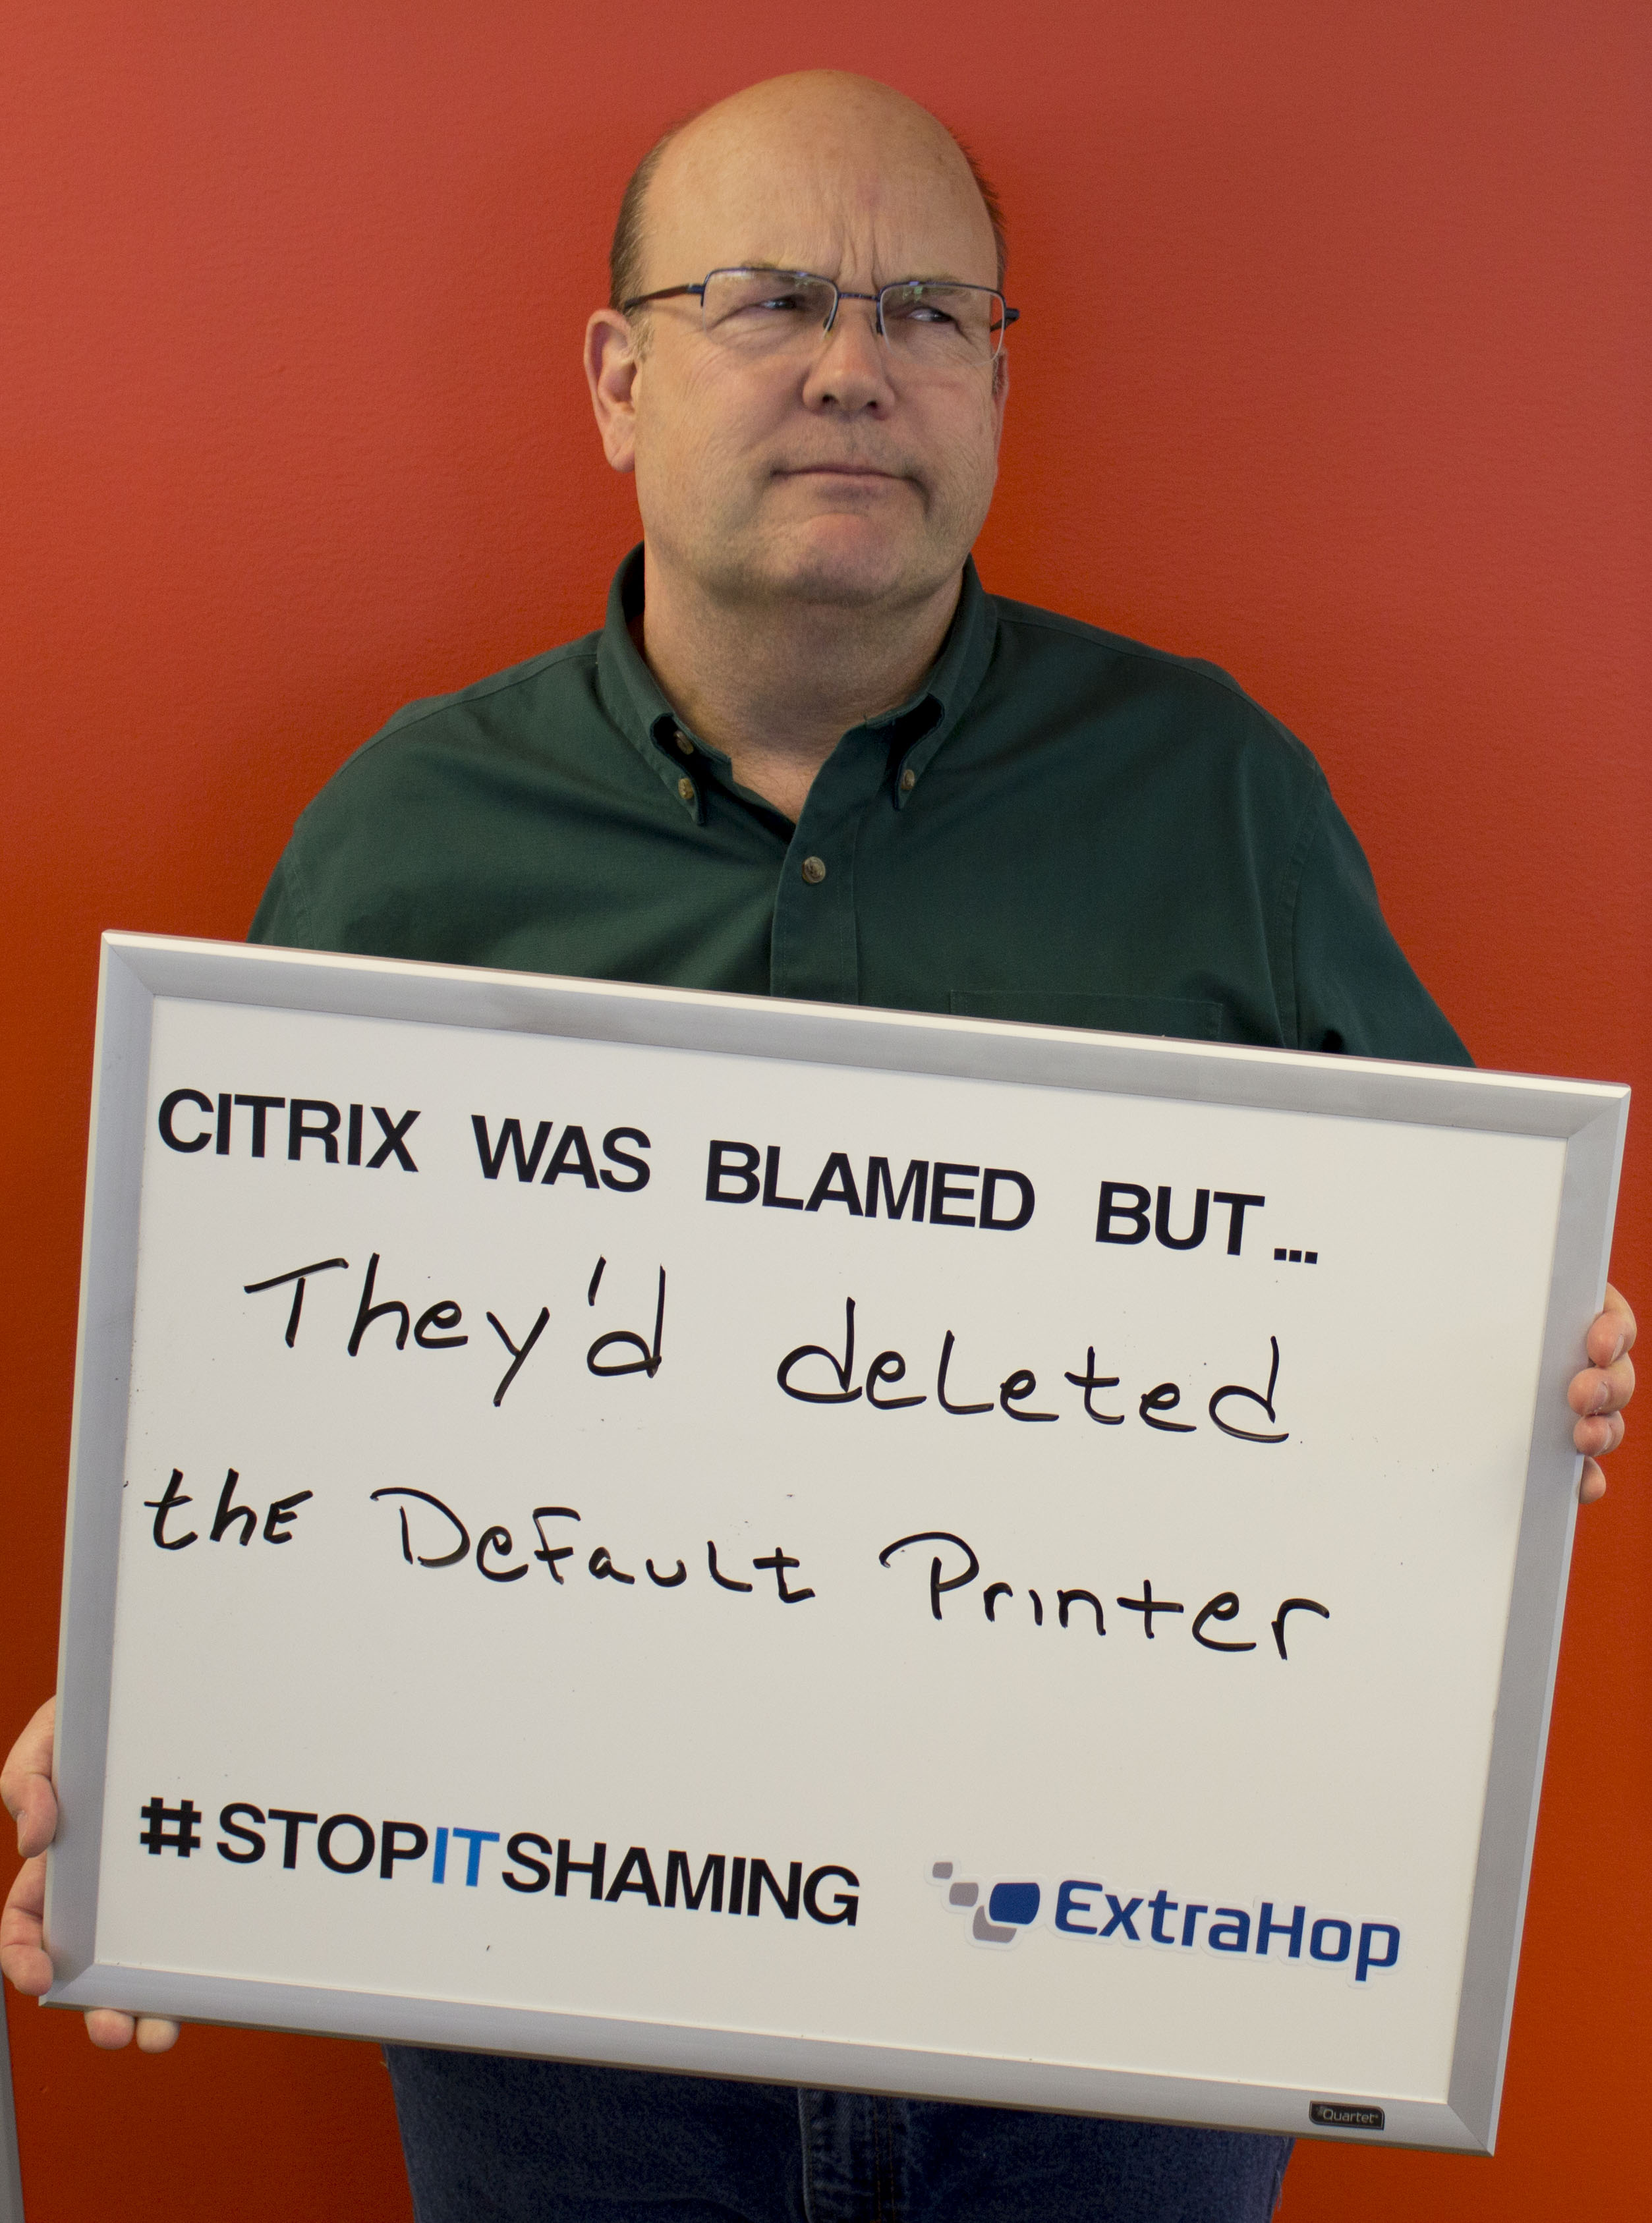 #StopITShaming - Default Printer